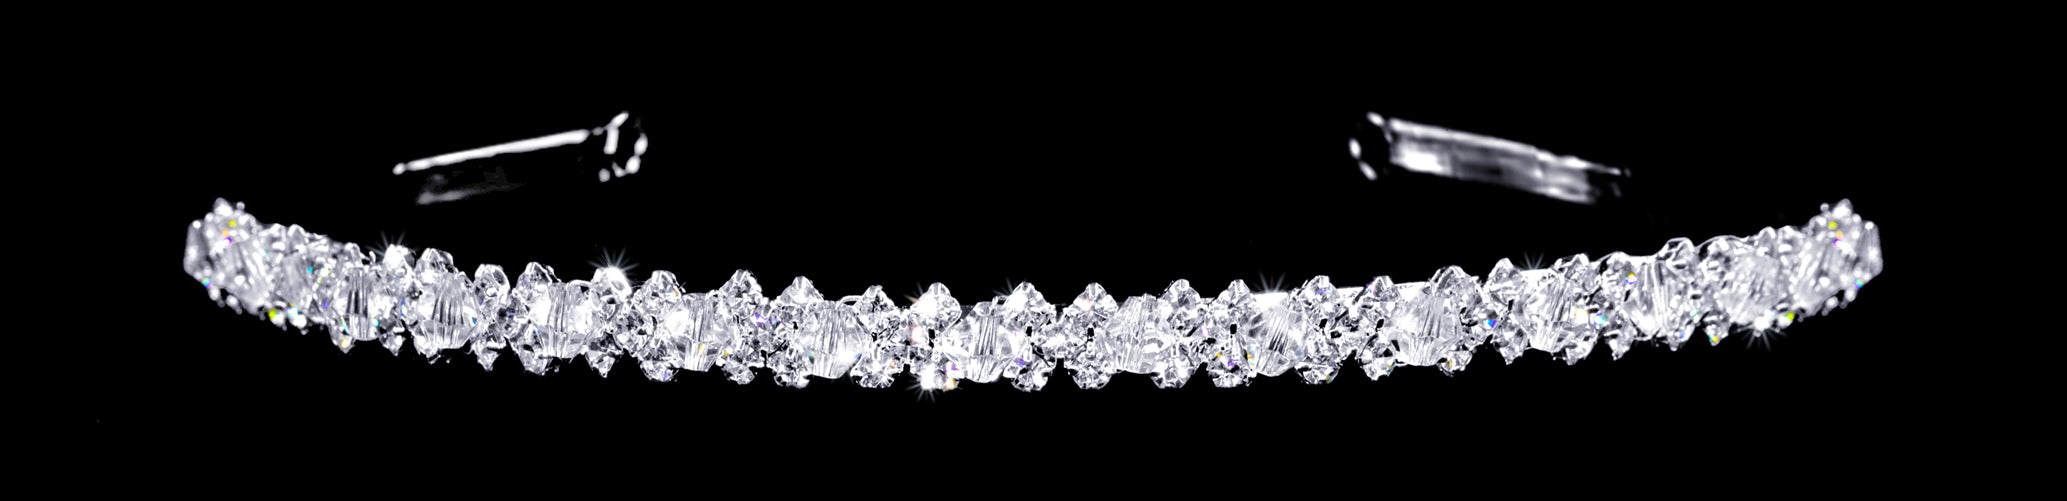 #12012 Alternating Crystal Bead and Rhinestone Tiara